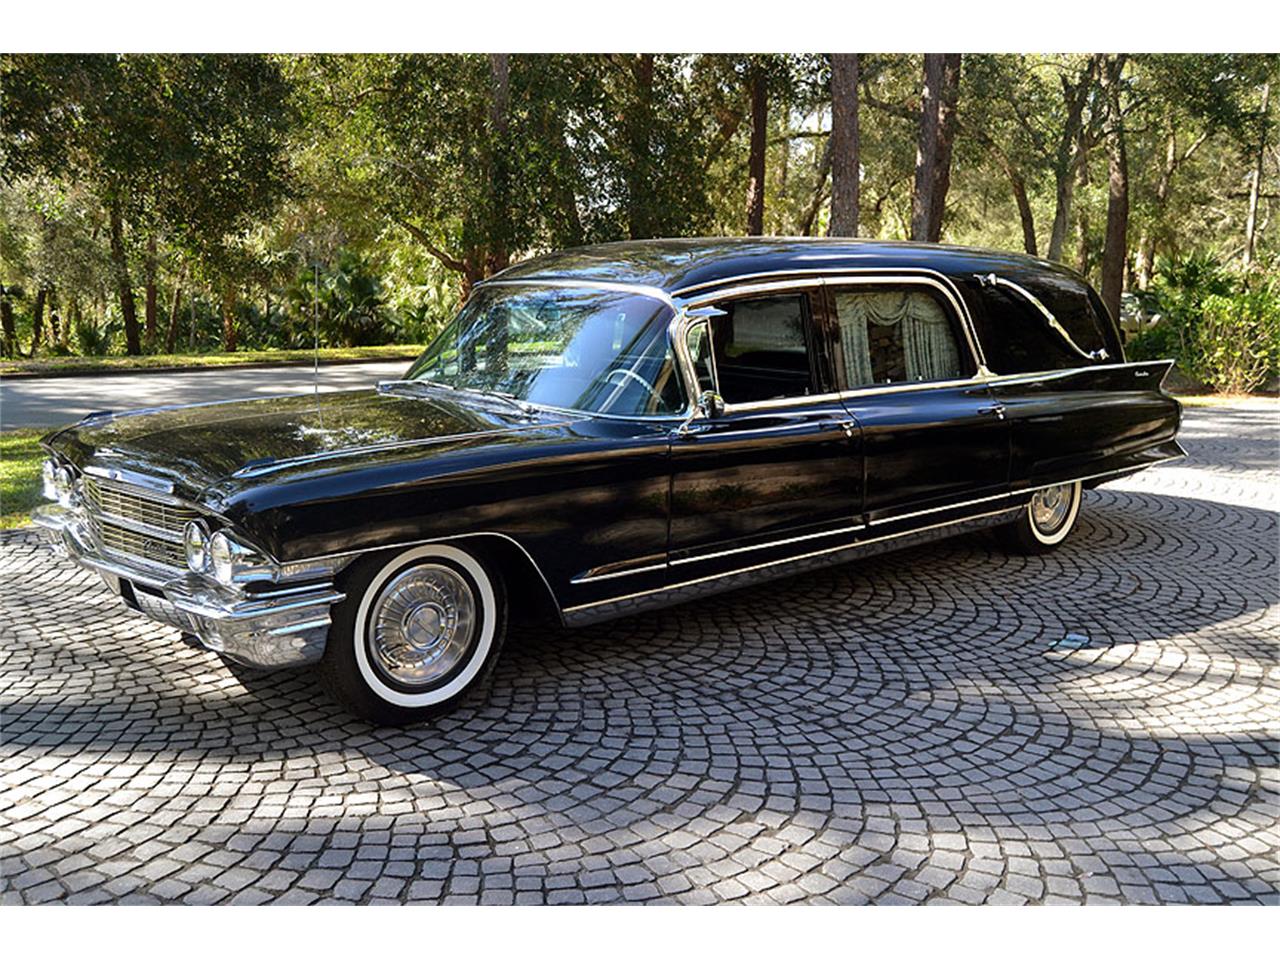 1962 Cadillac Eureka Landau Funeral Coach for Sale  |  CC-1104564